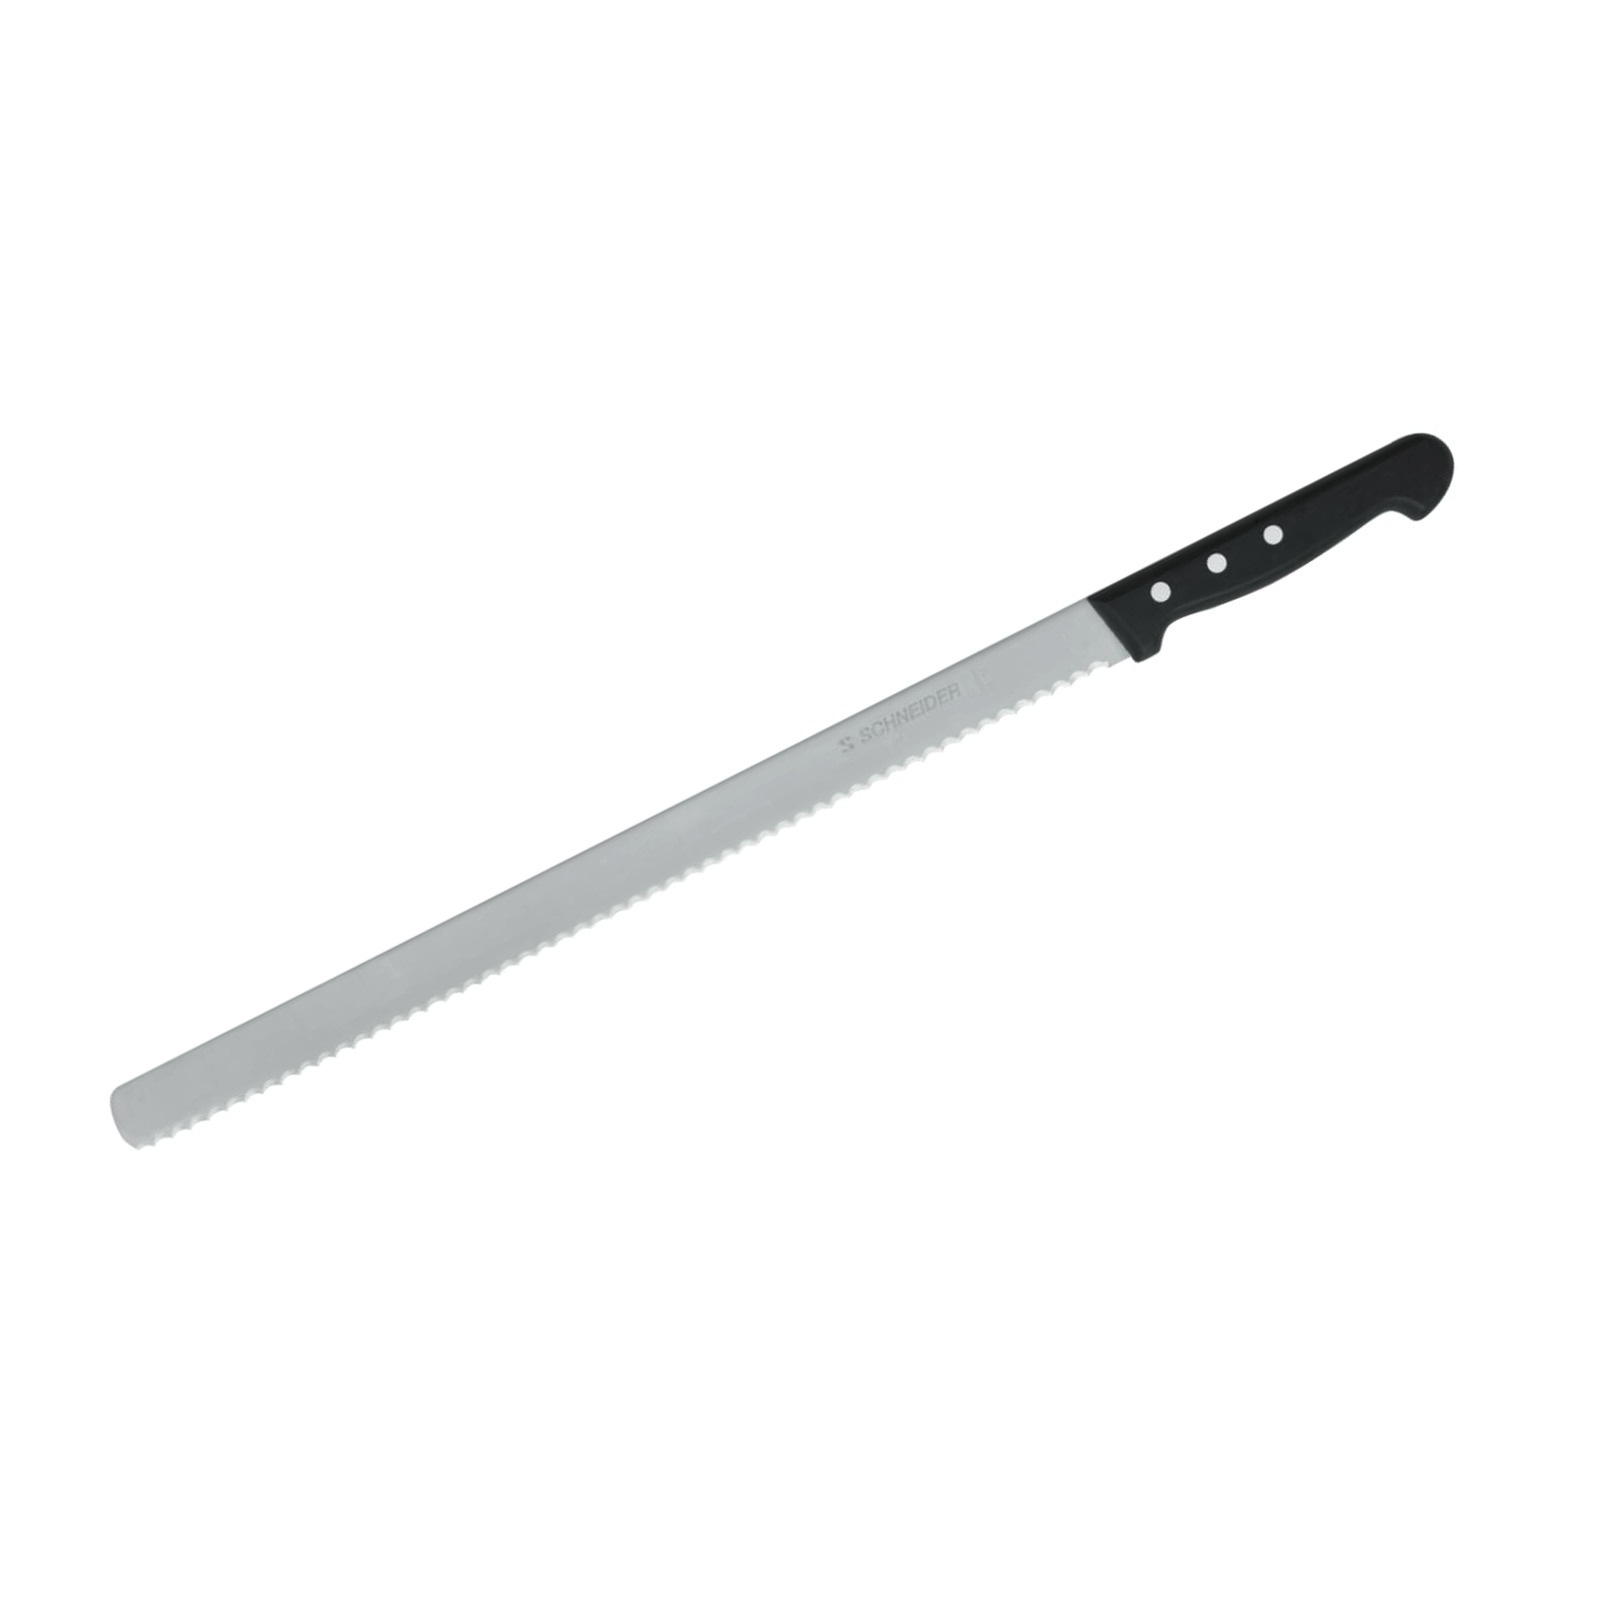 Schneider GmbH Saw knife, 31 cm